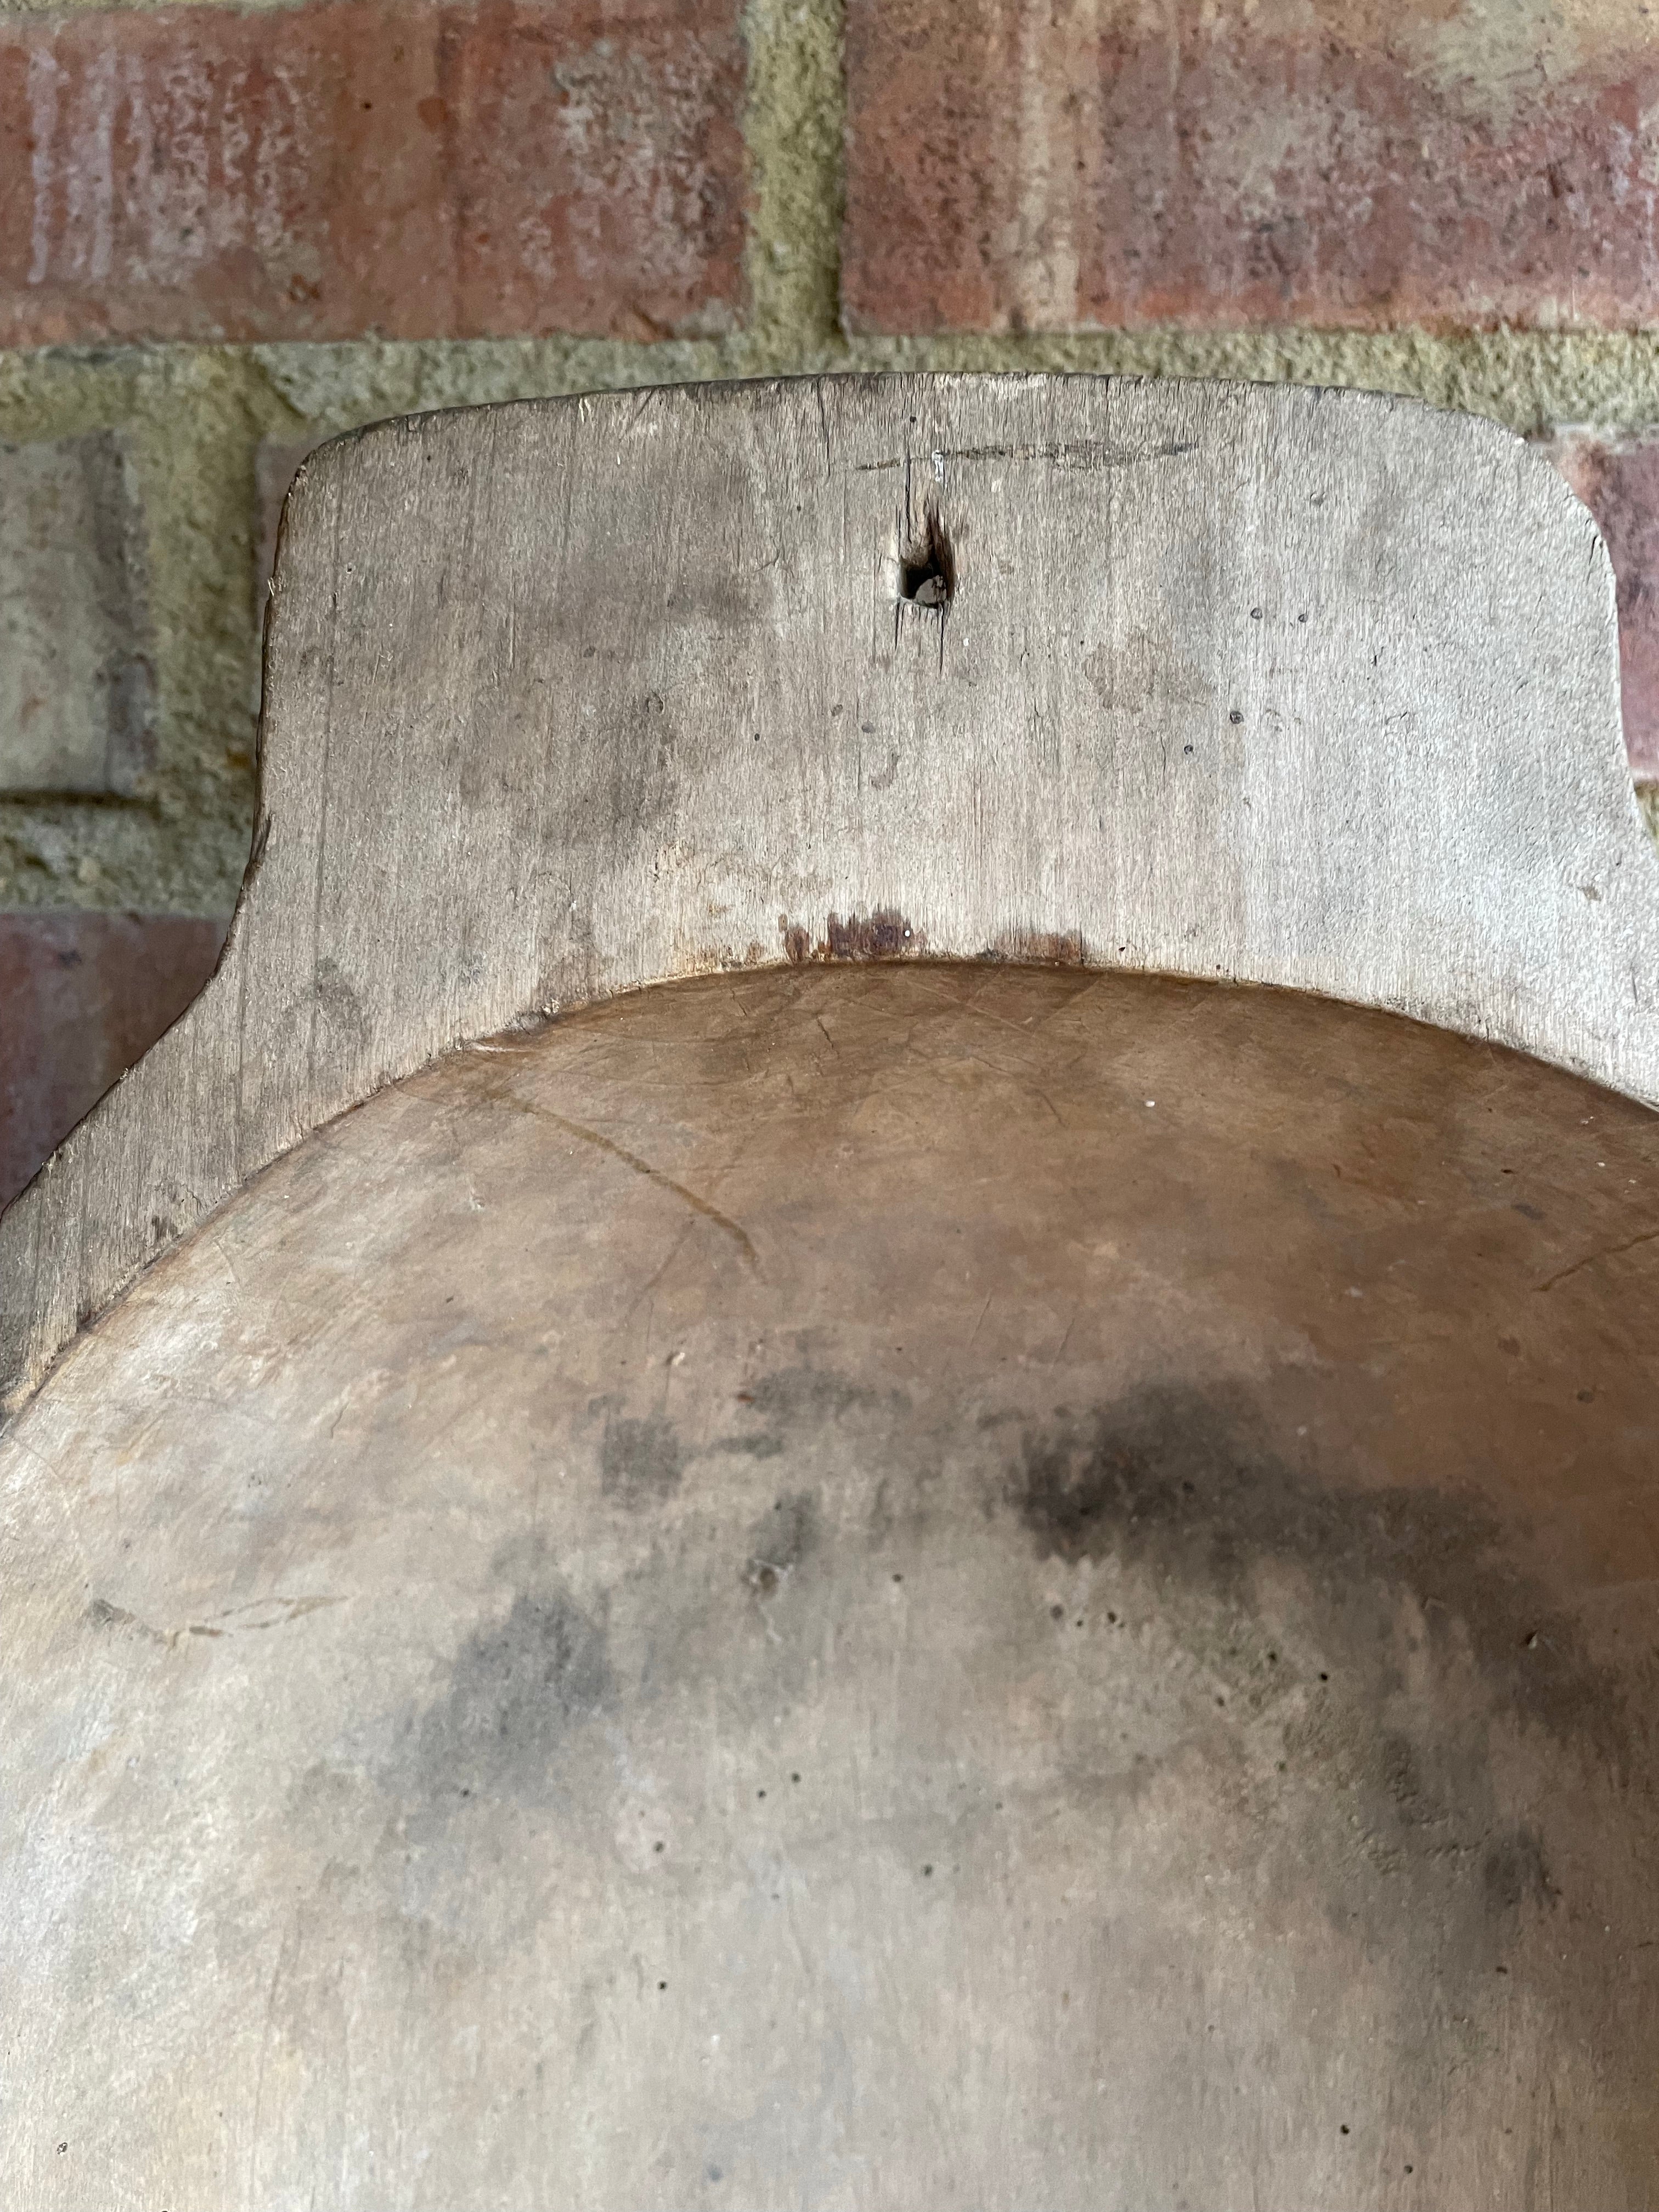 Large Rustic Wooden Dough Bowl 2